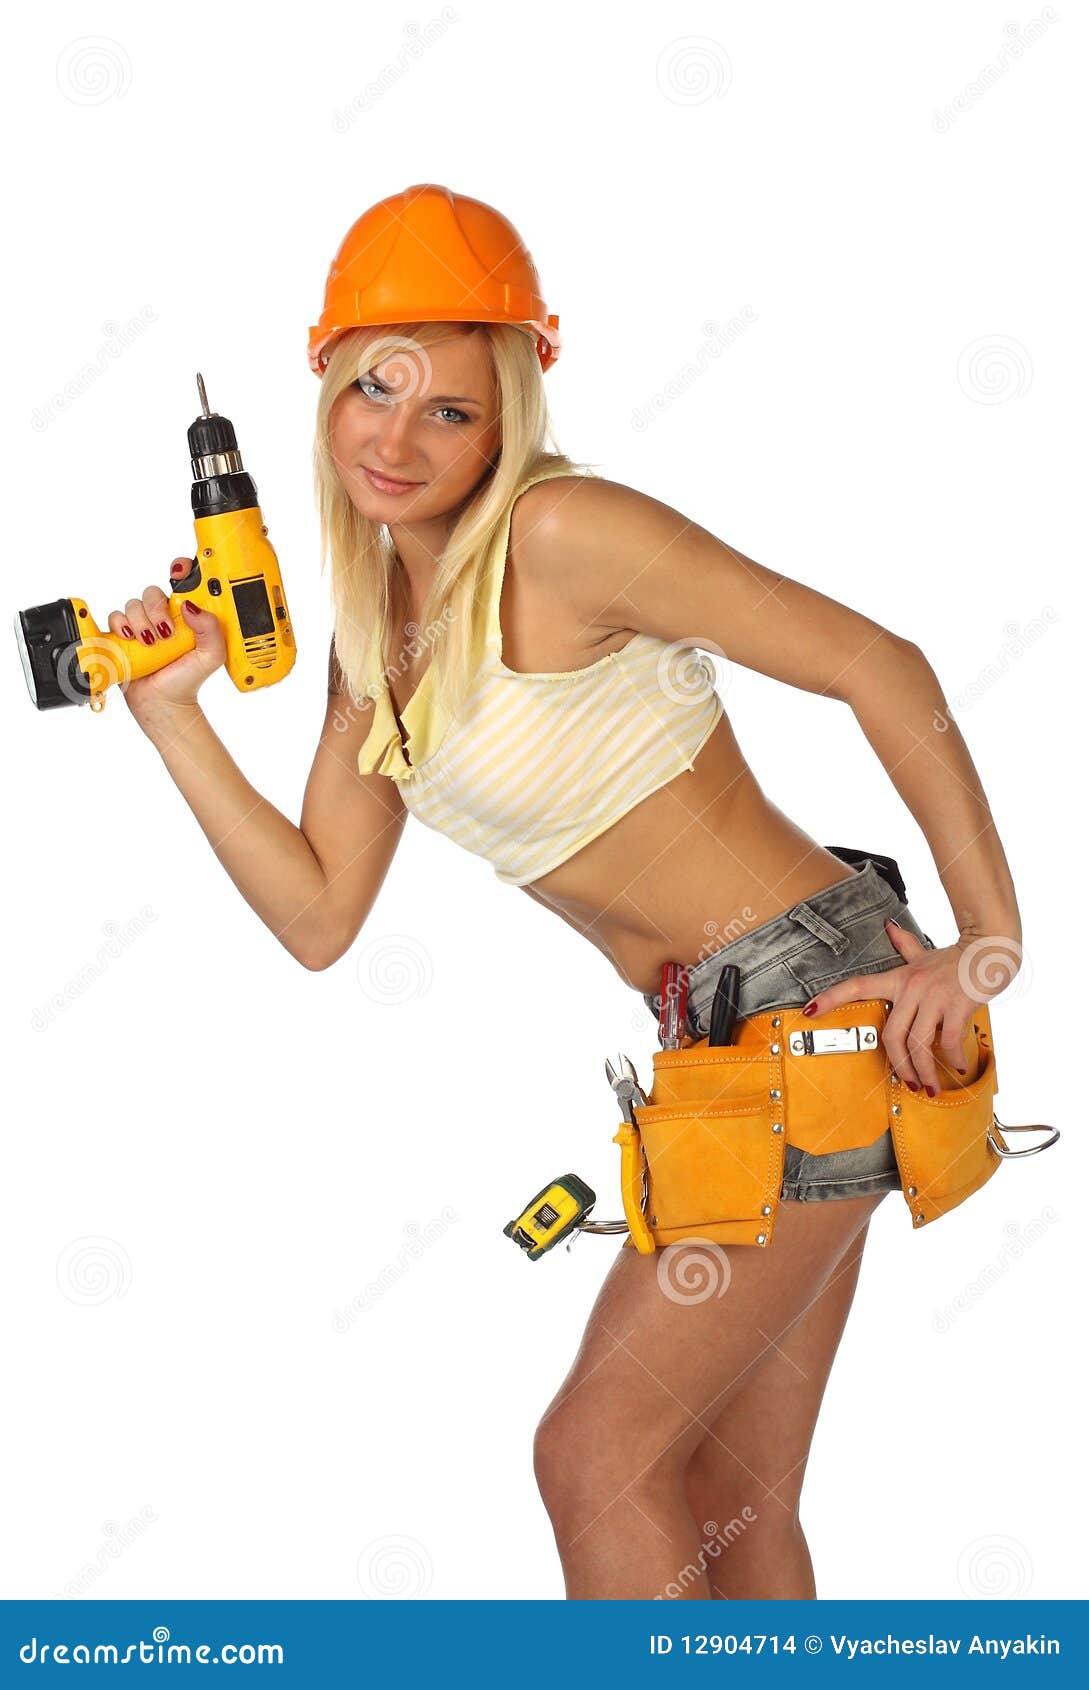 dawn sitz share sexy female construction worker photos